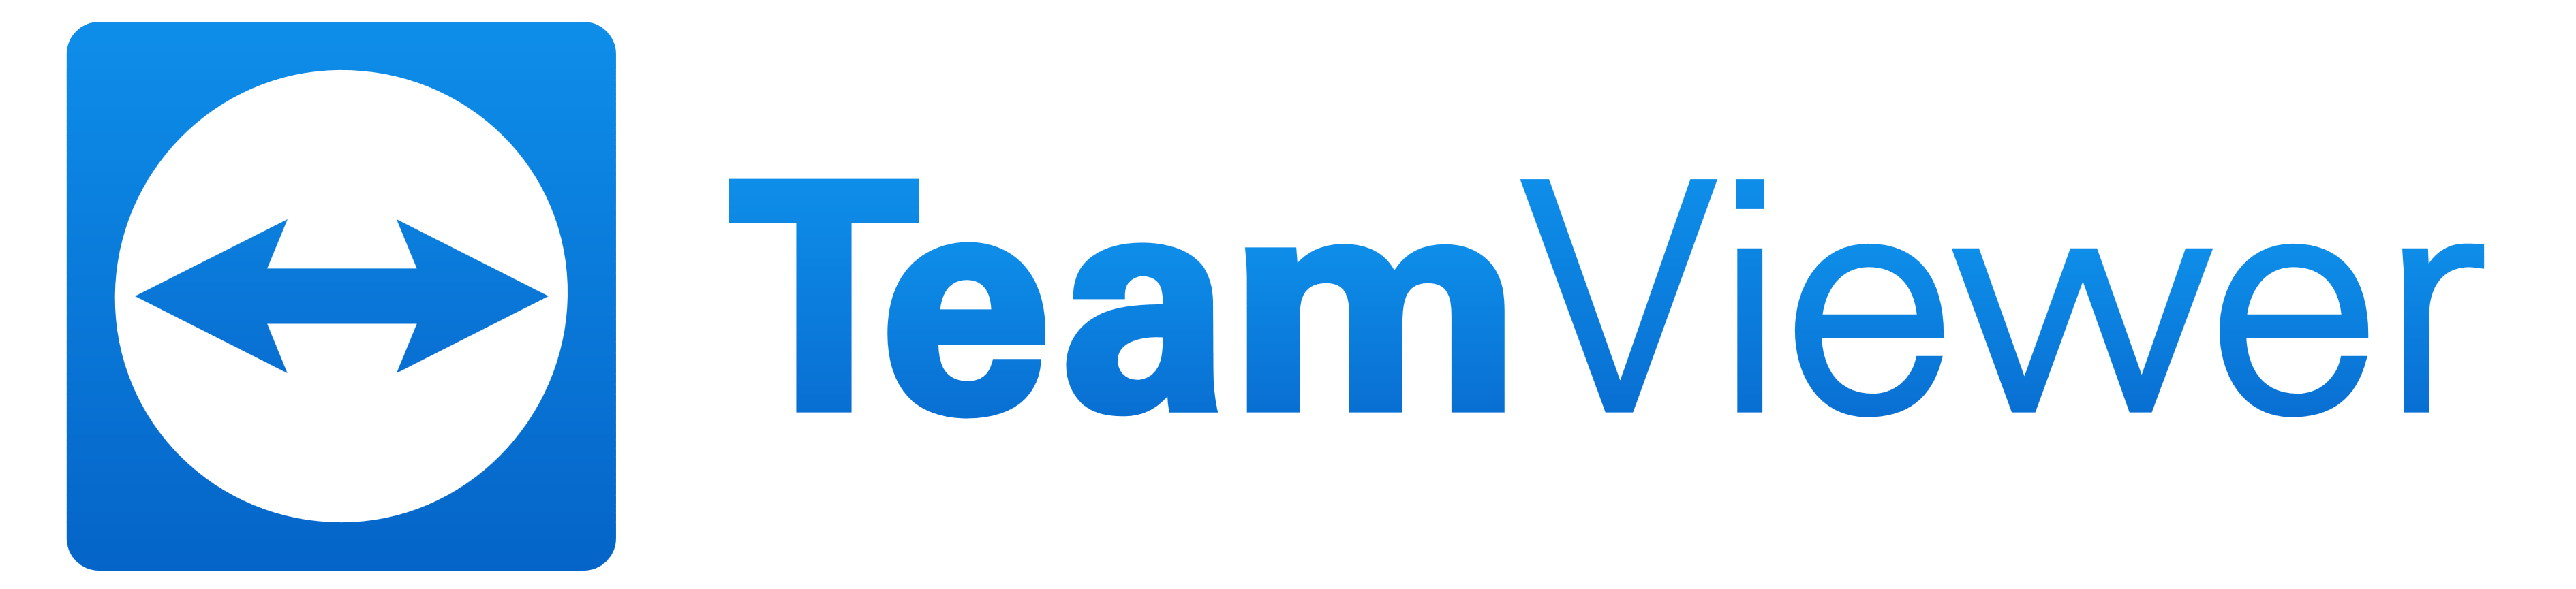 teamviewer logo transparent